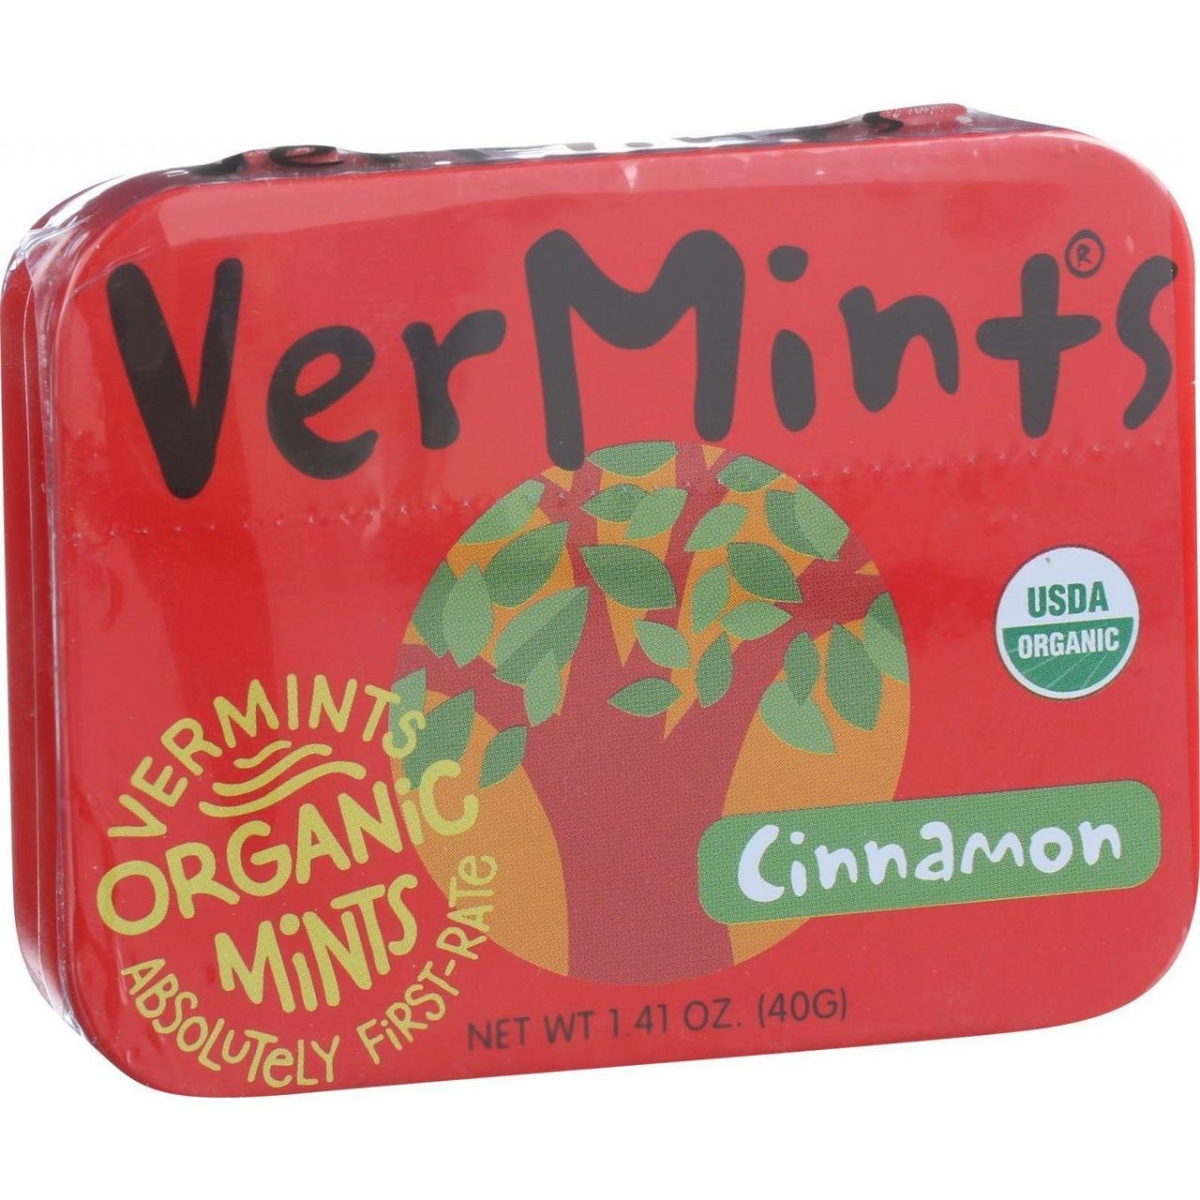 Hg0839613 1.41 Oz Breath Mints All Natural, Cinnamint - Case Of 6